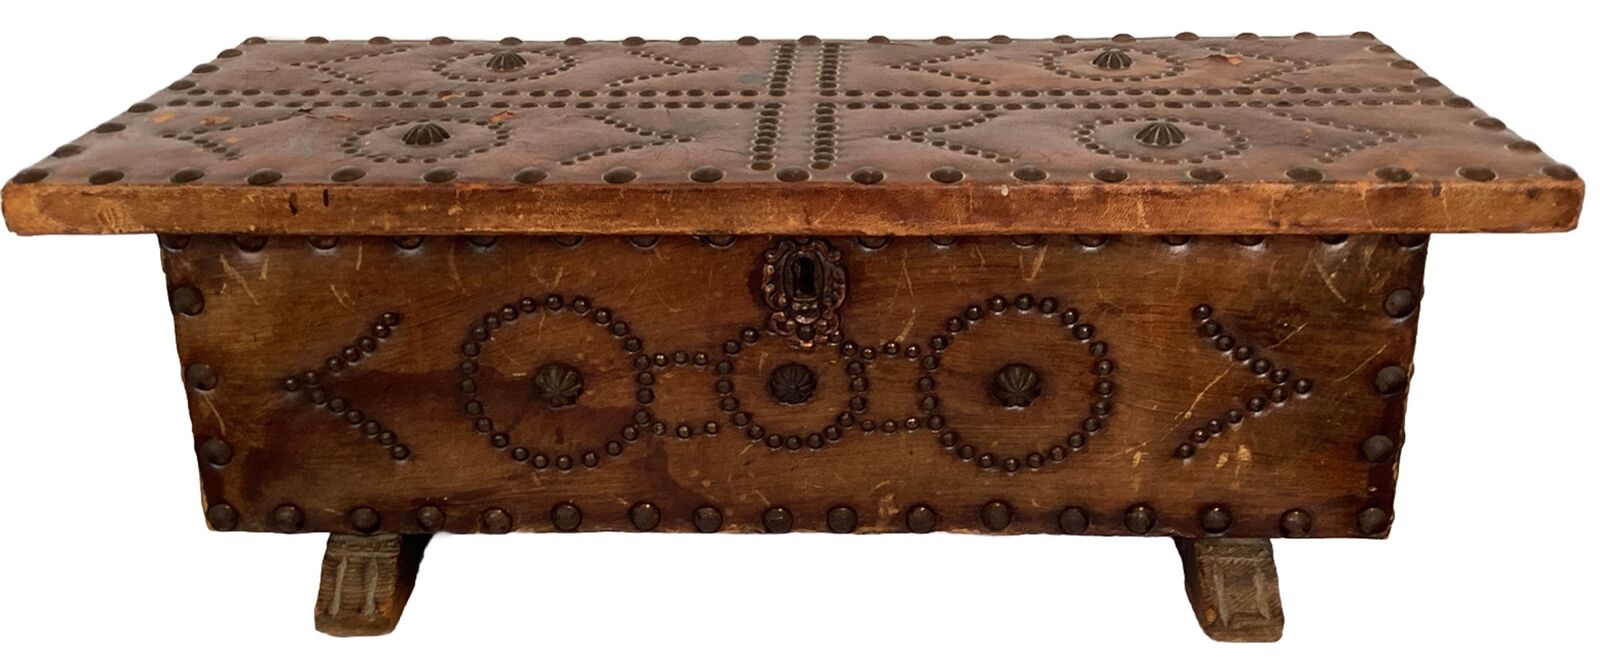 Antique Large Spanish Leather Made Rare Storage Box With Stud Patterning W44cm